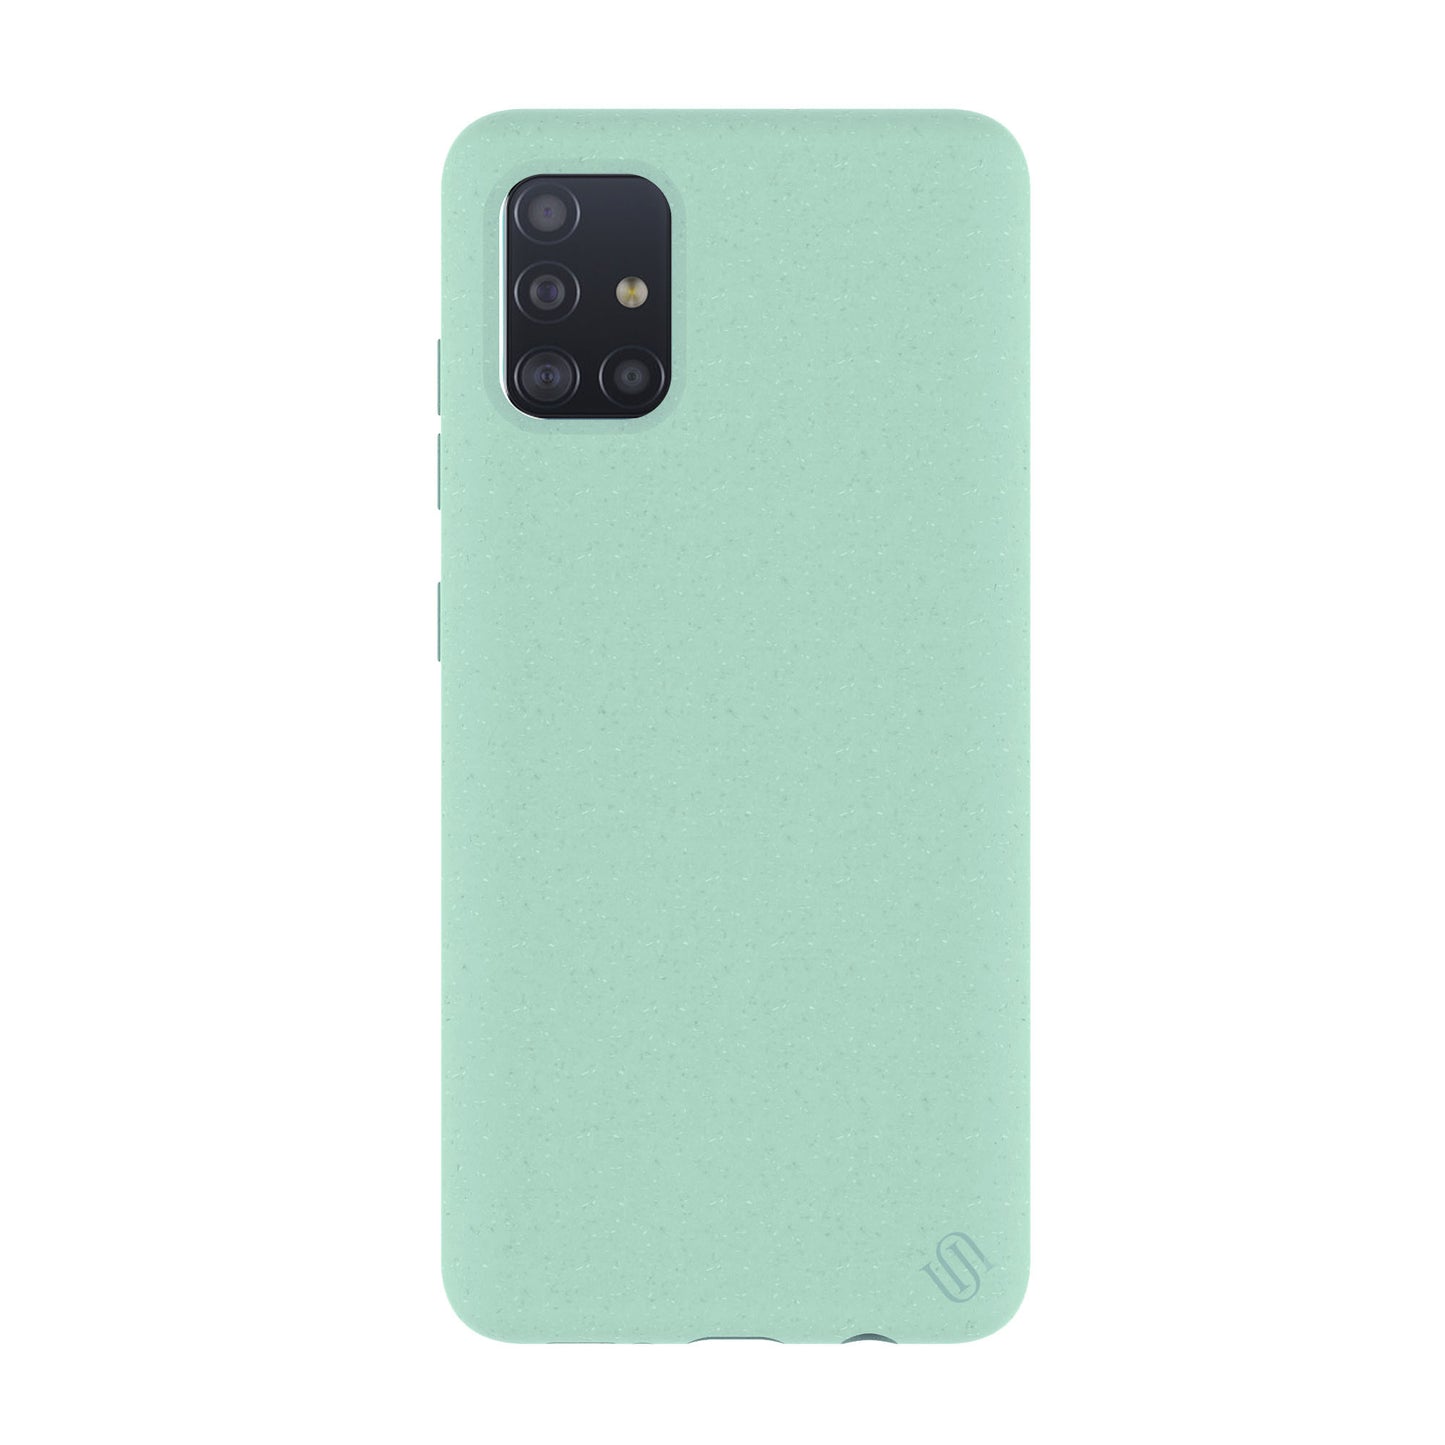 Samsung Galaxy A71 Uunique Green (Green Mint) Nutrisiti Eco Back Case - 15-06981